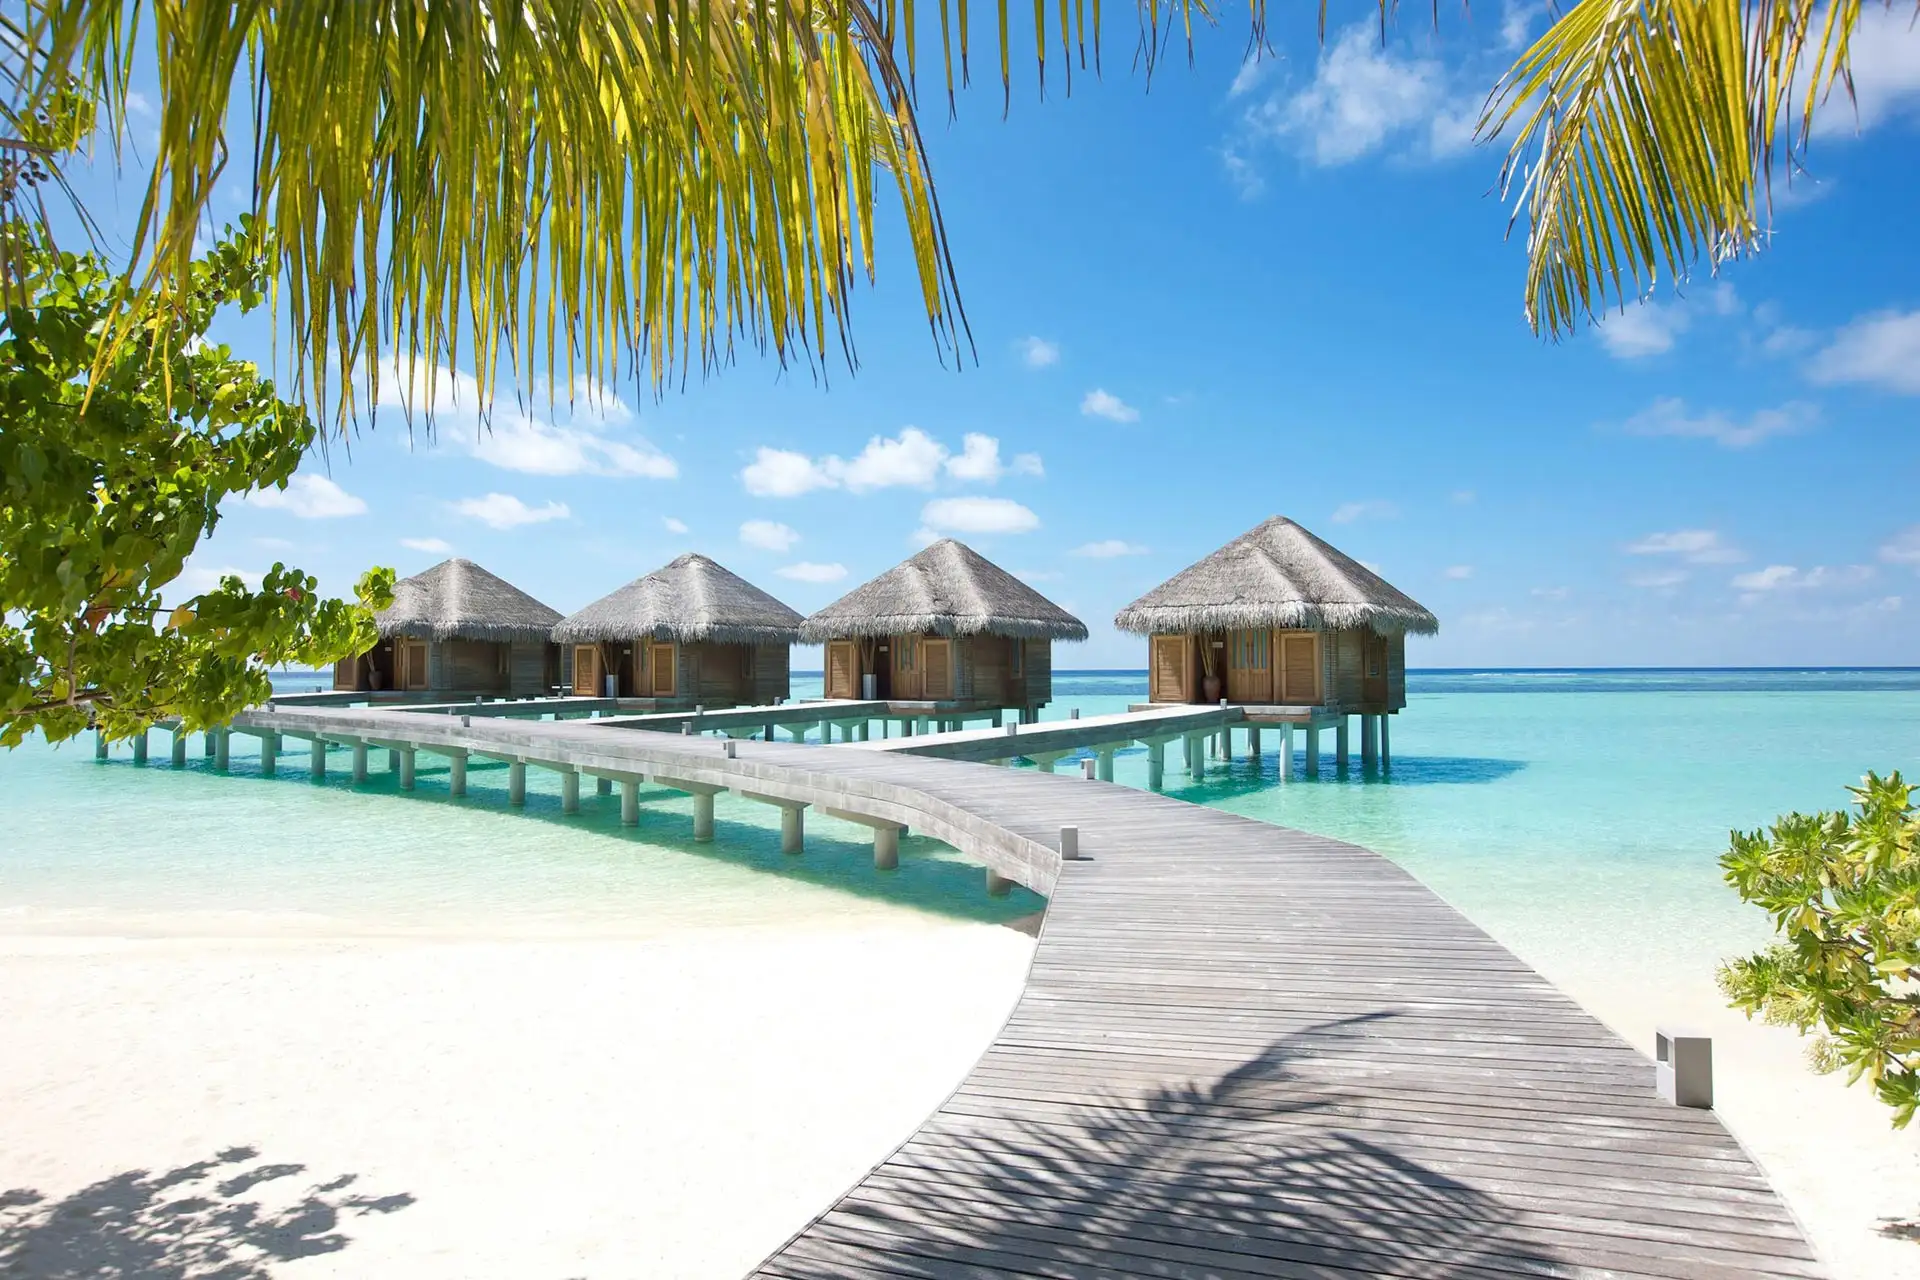 Lux* South Ari Atoll Resort in the Maldives; Courtesy of Lux* South Ari Atoll Resort